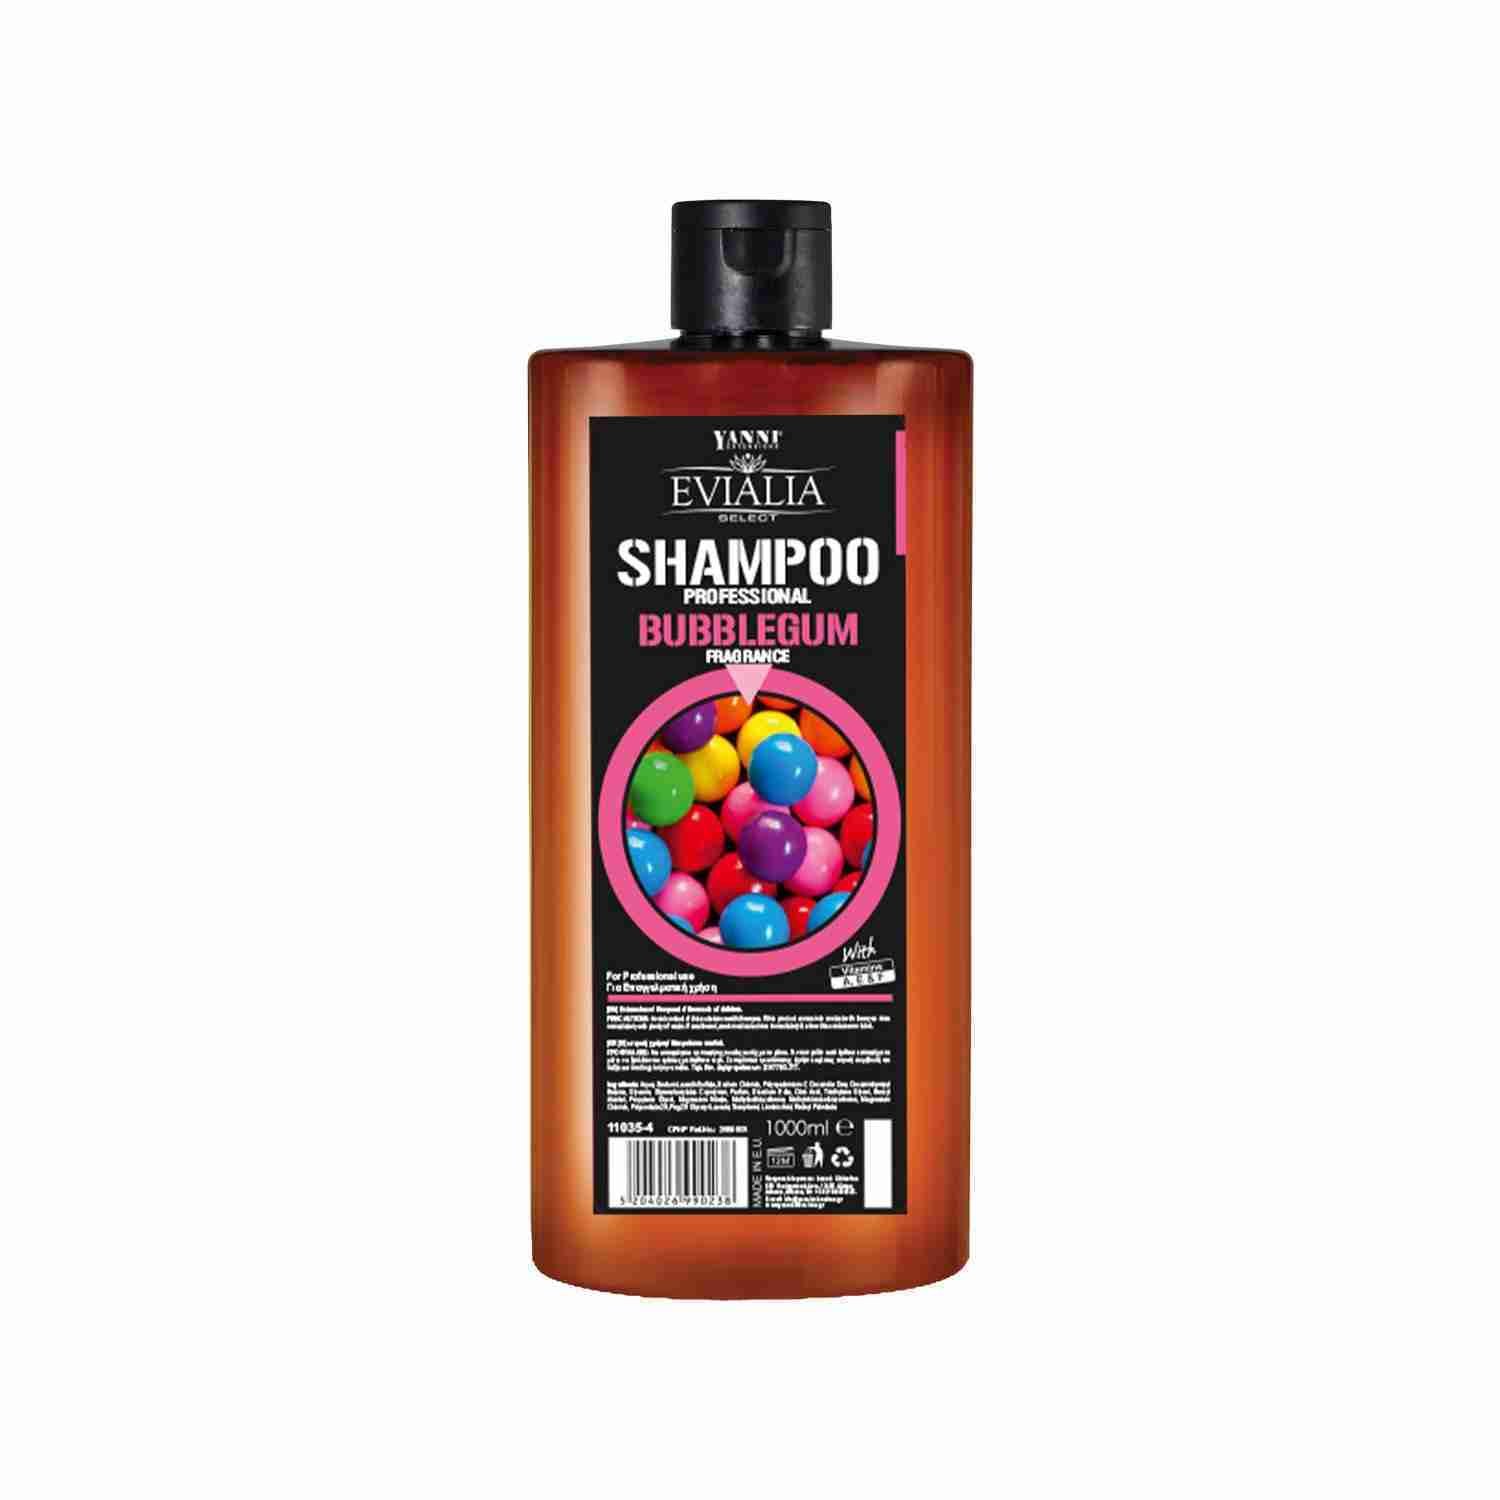 Evialia Bubblegum Shampoo With Vitamins A,E & F Strengthens Hair – 1lt